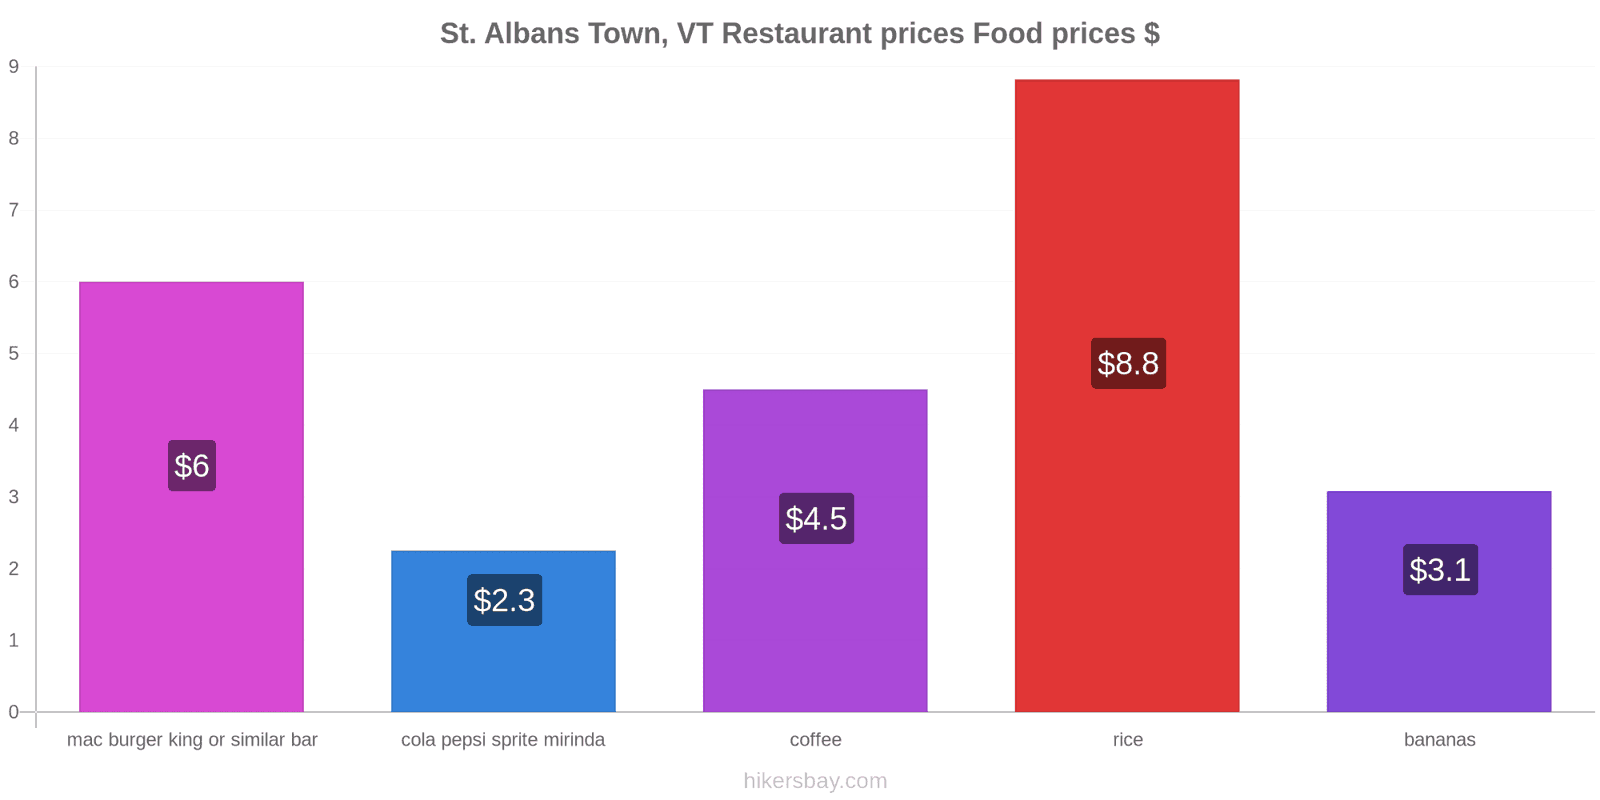 St. Albans Town, VT price changes hikersbay.com